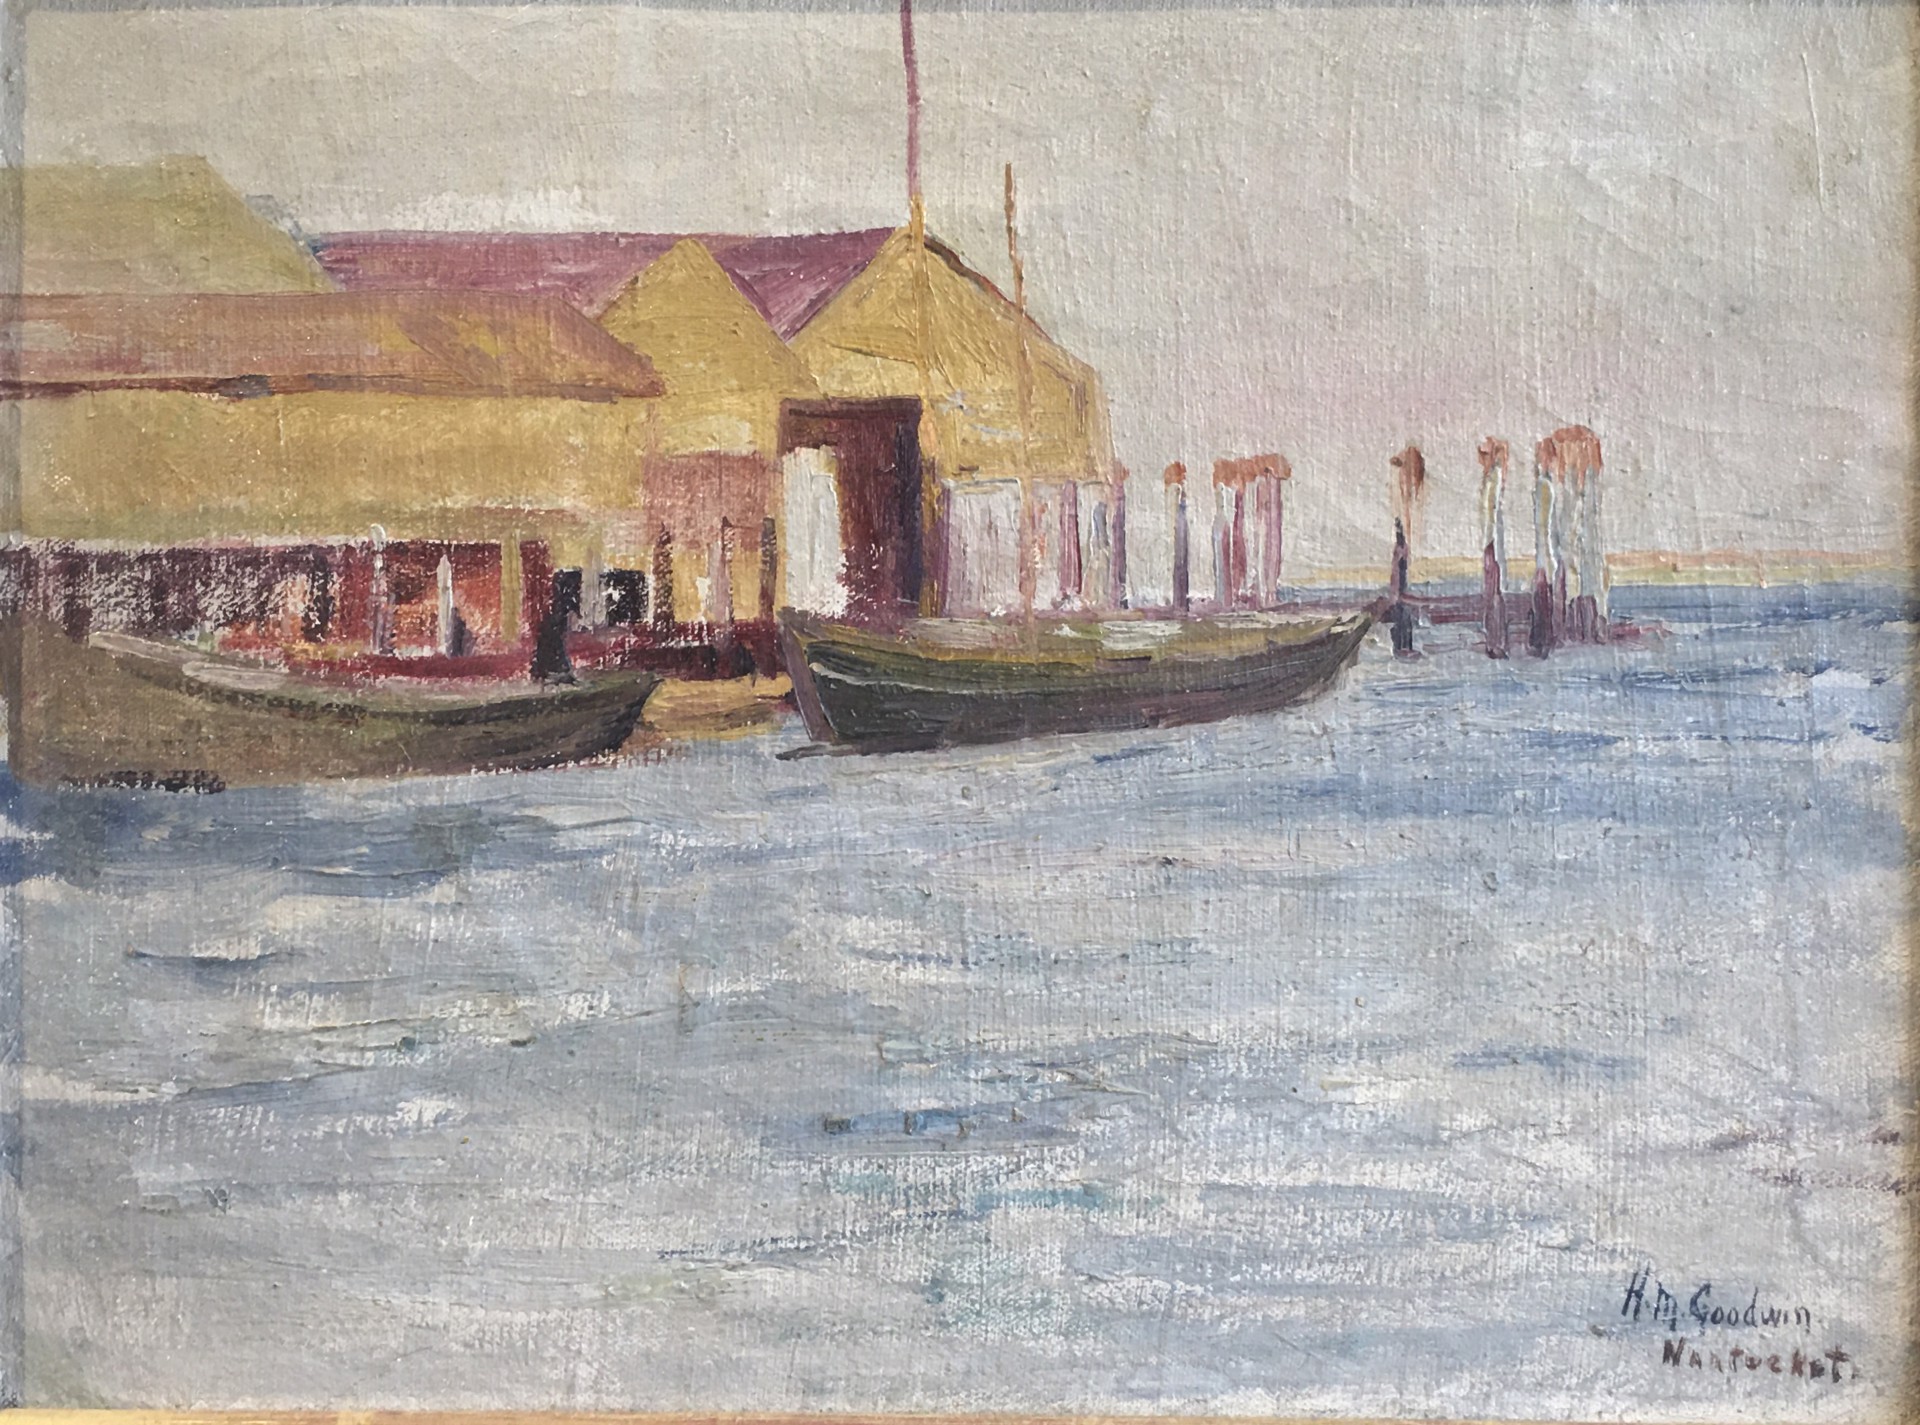 Nantucket Harbor by Helen Goodwin (1865-1955)